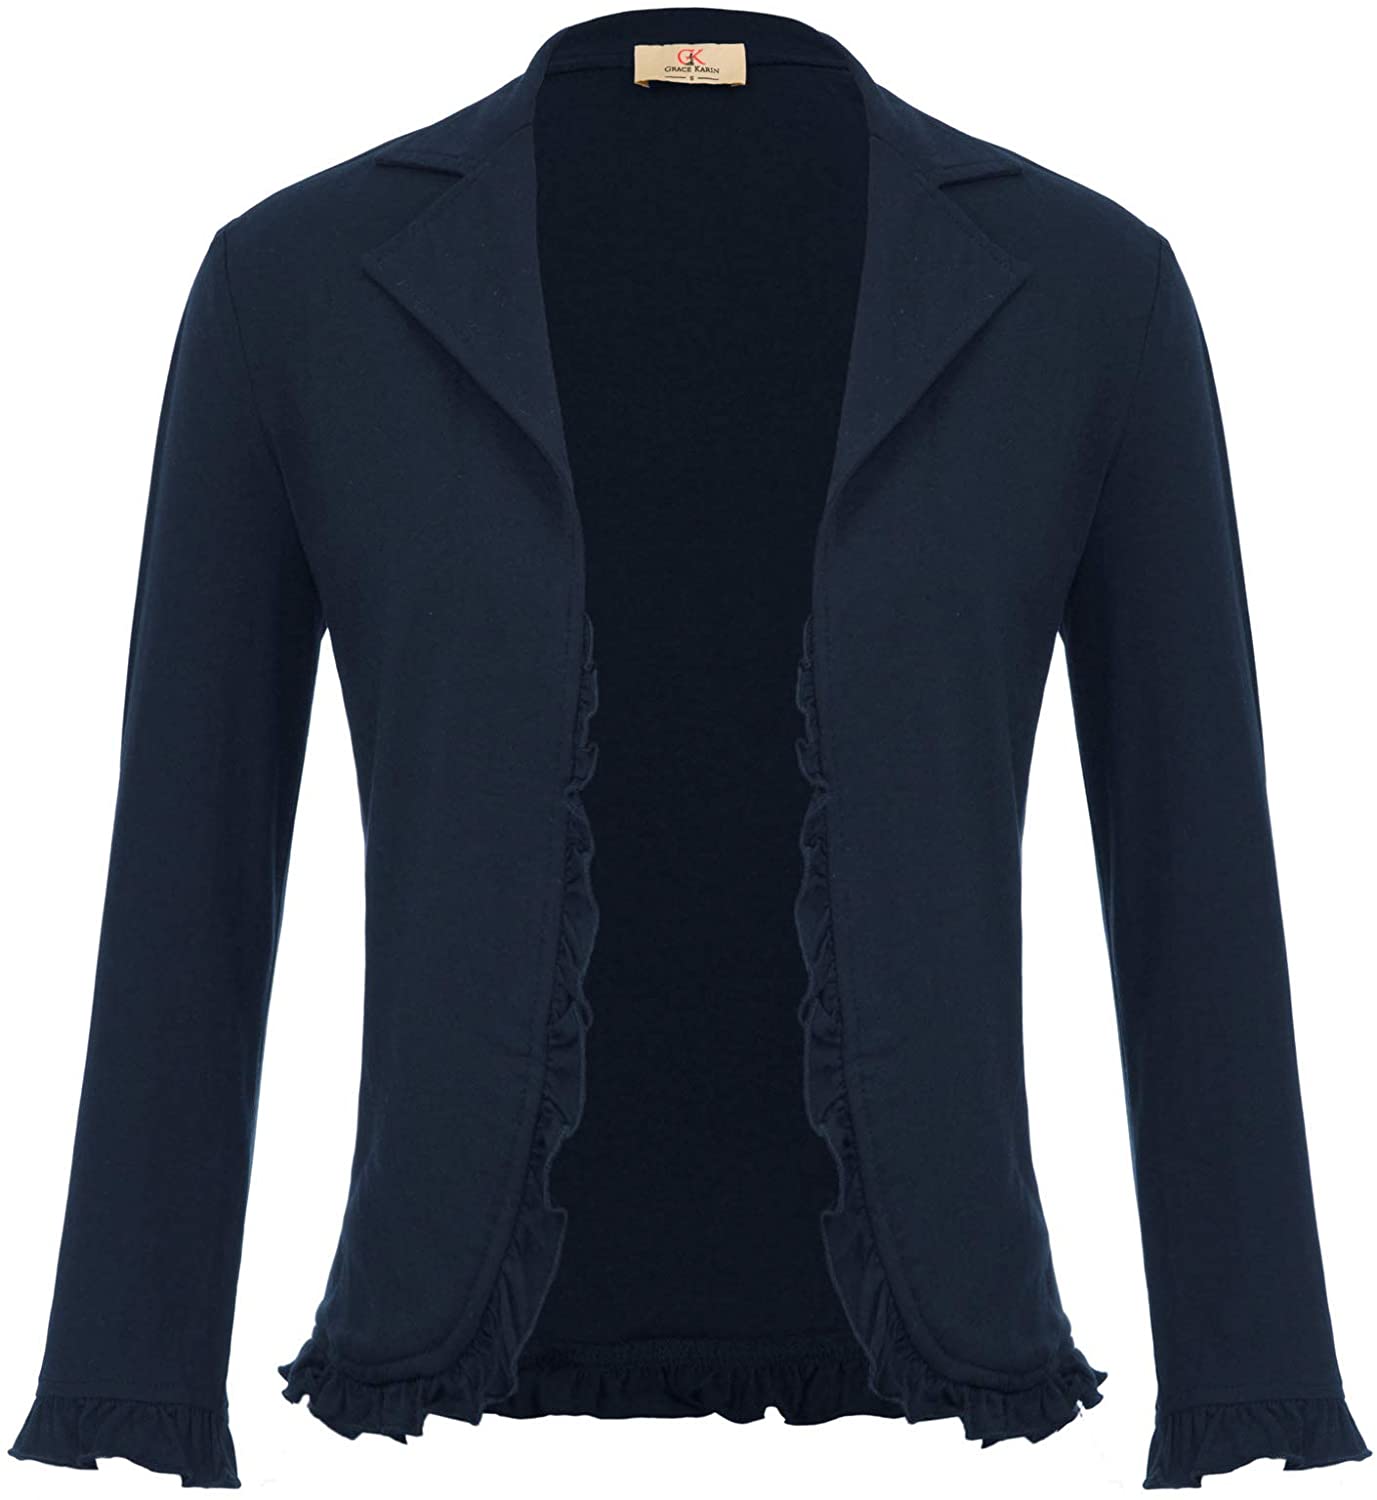 GRACE KARIN Women Business Casual Cropped Blazer Jacket Open Front Cotton Cardigan 